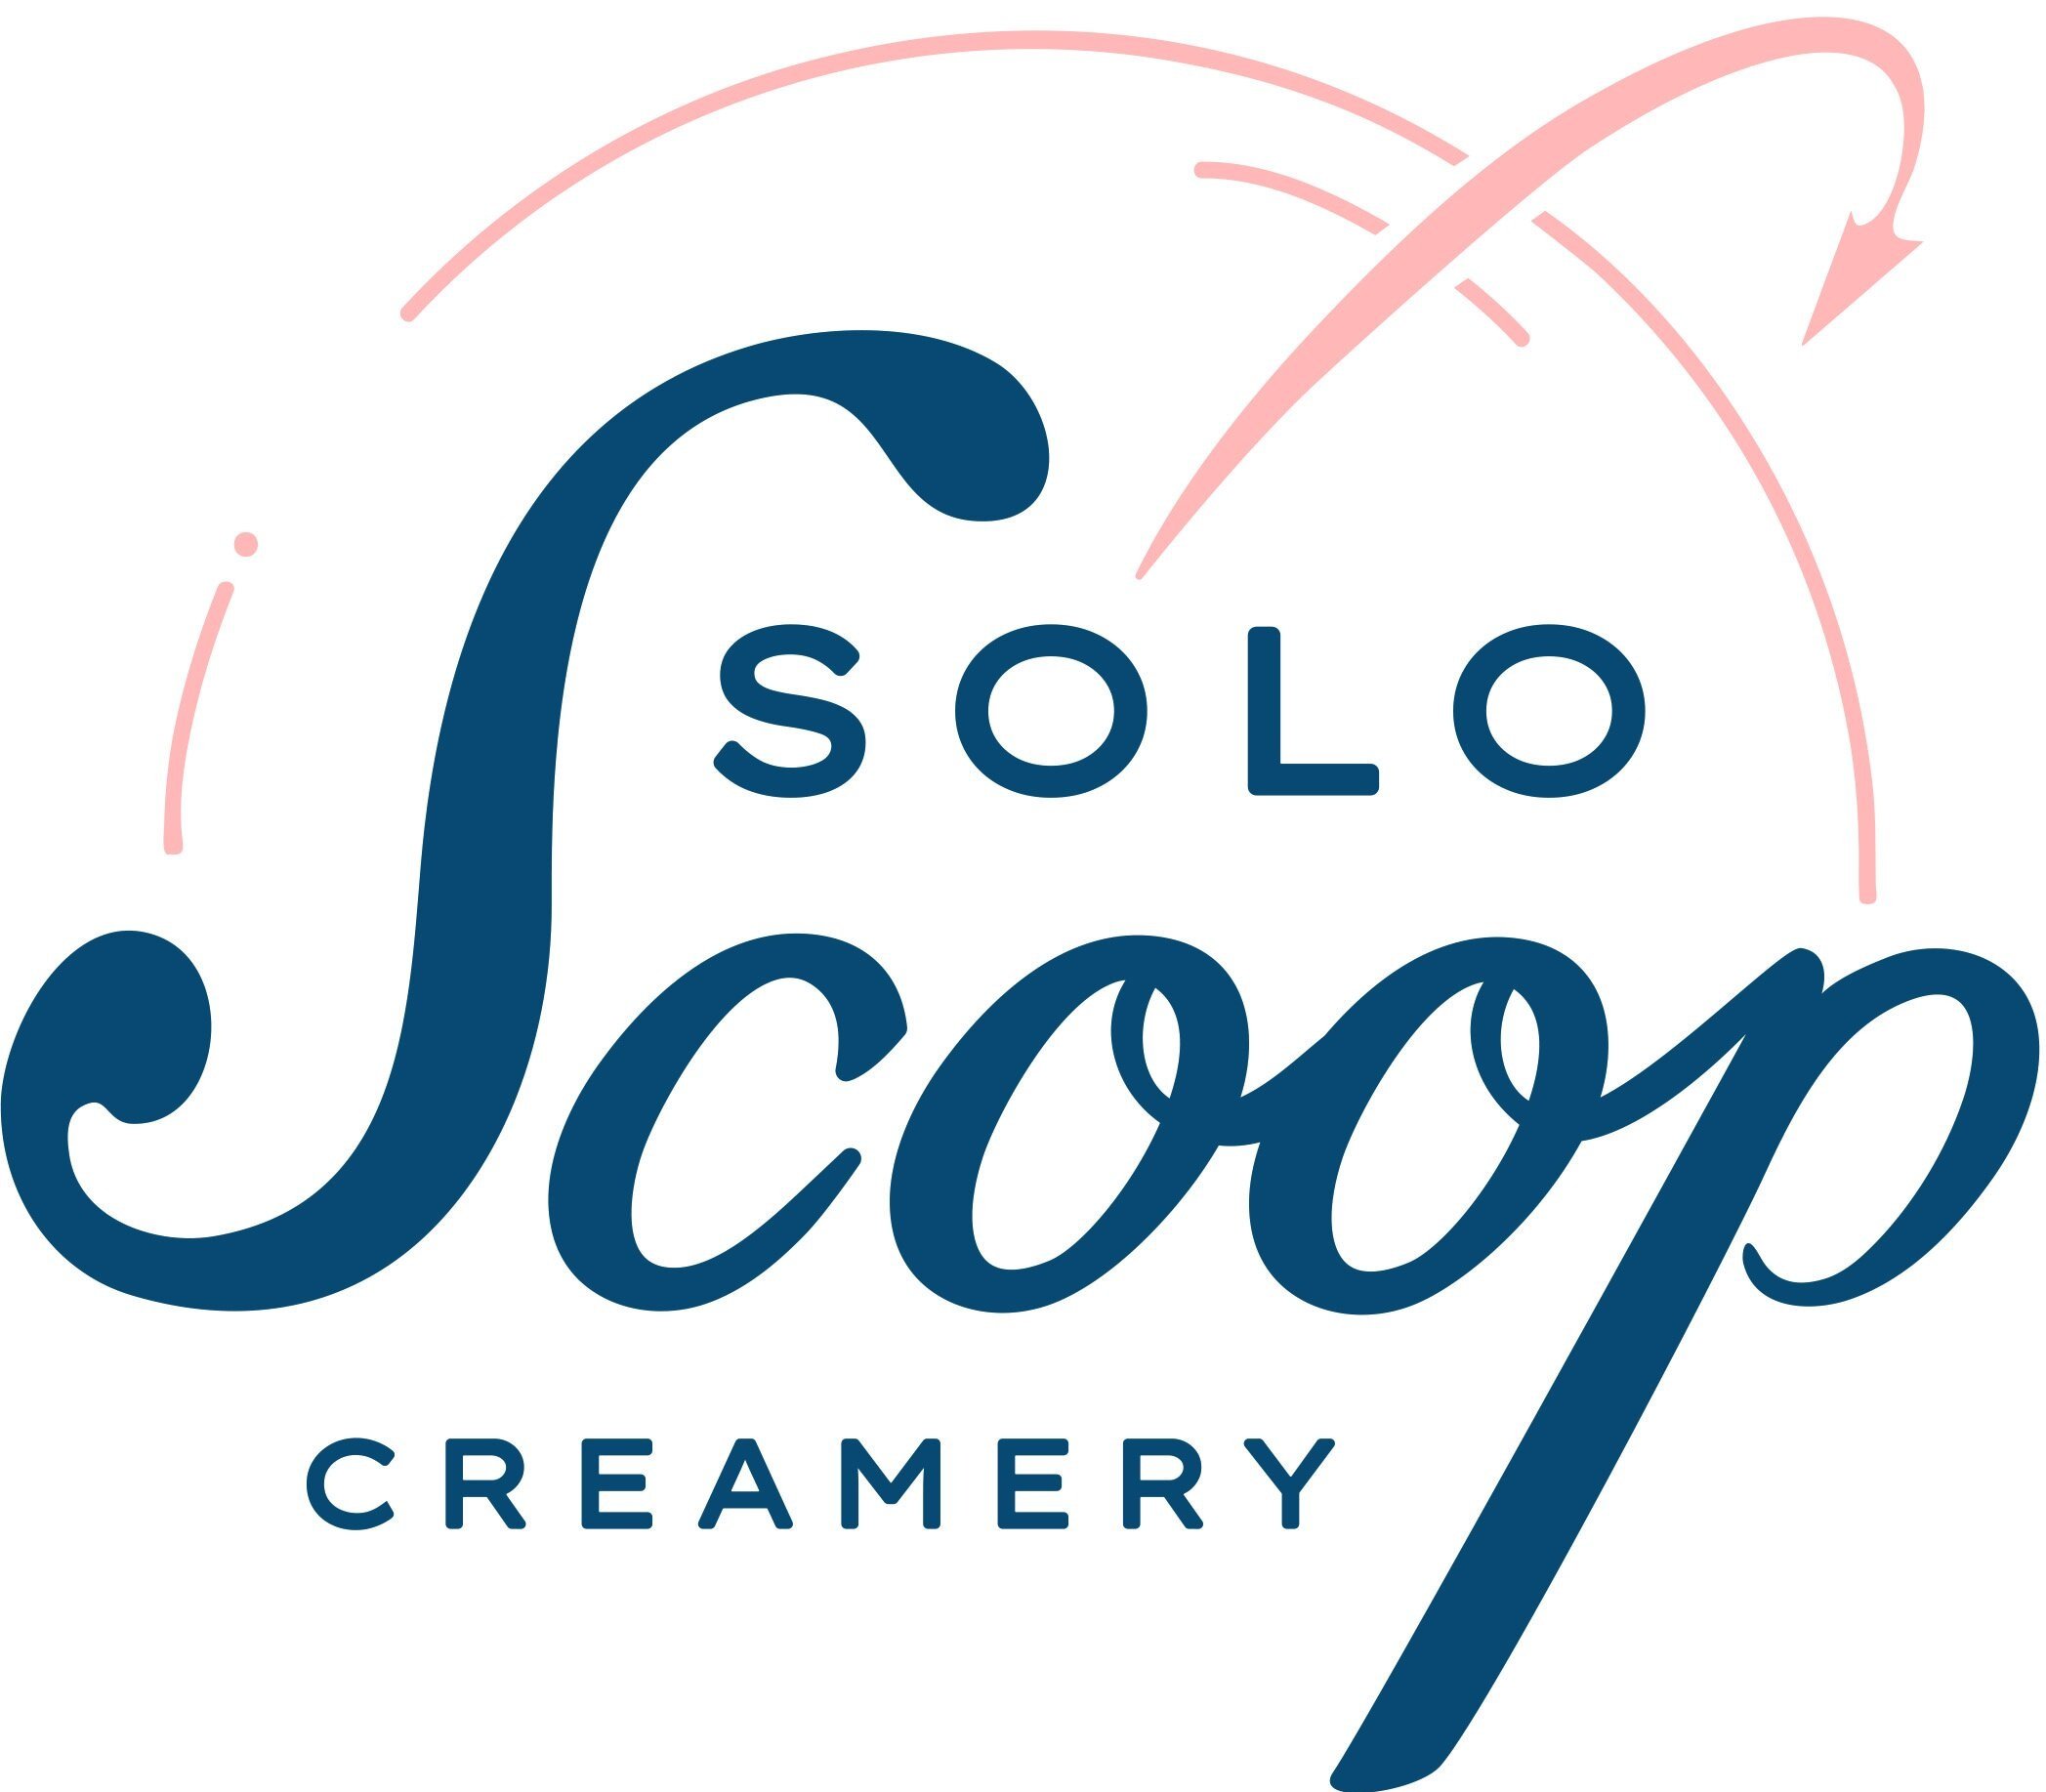 soloscoop_logo.jpg